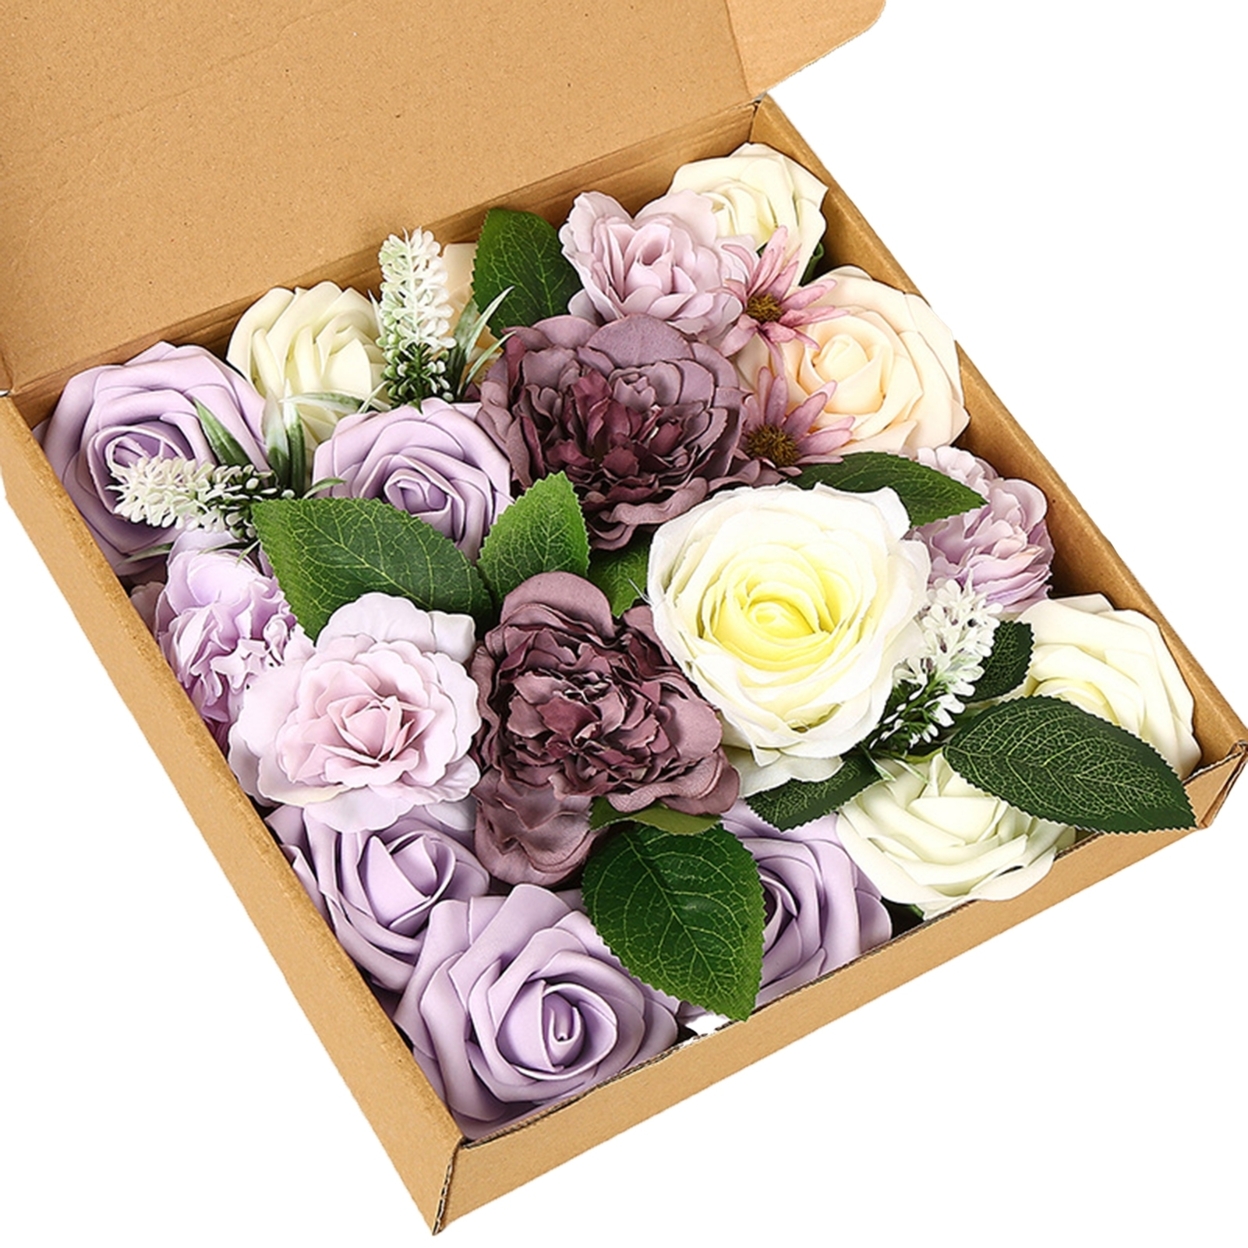 1 Box Beautiful Realistic Artificial Flower Faux Silk Flower Vivid Fine Texture Simulation Rose Wedding Accessories - purple